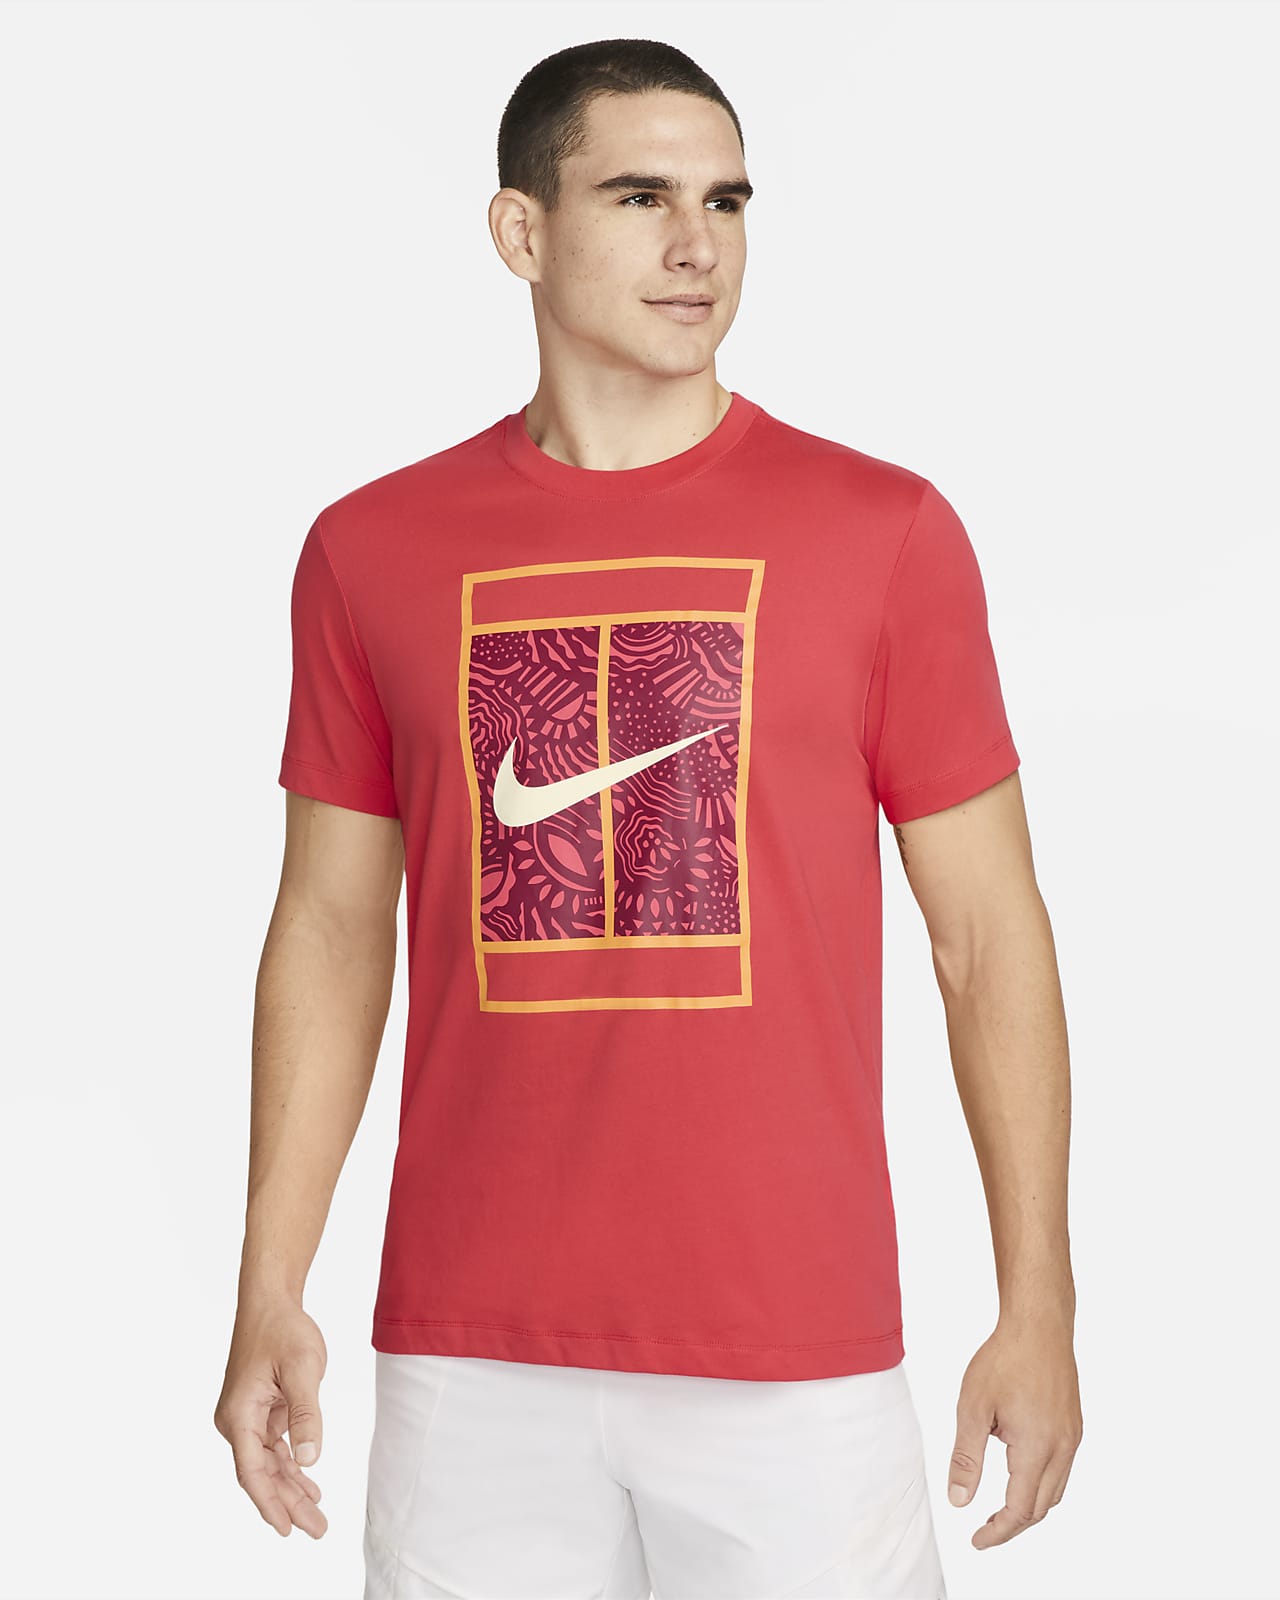 NikeCourt Dri-FIT Tennis T-Shirt. Nike.com